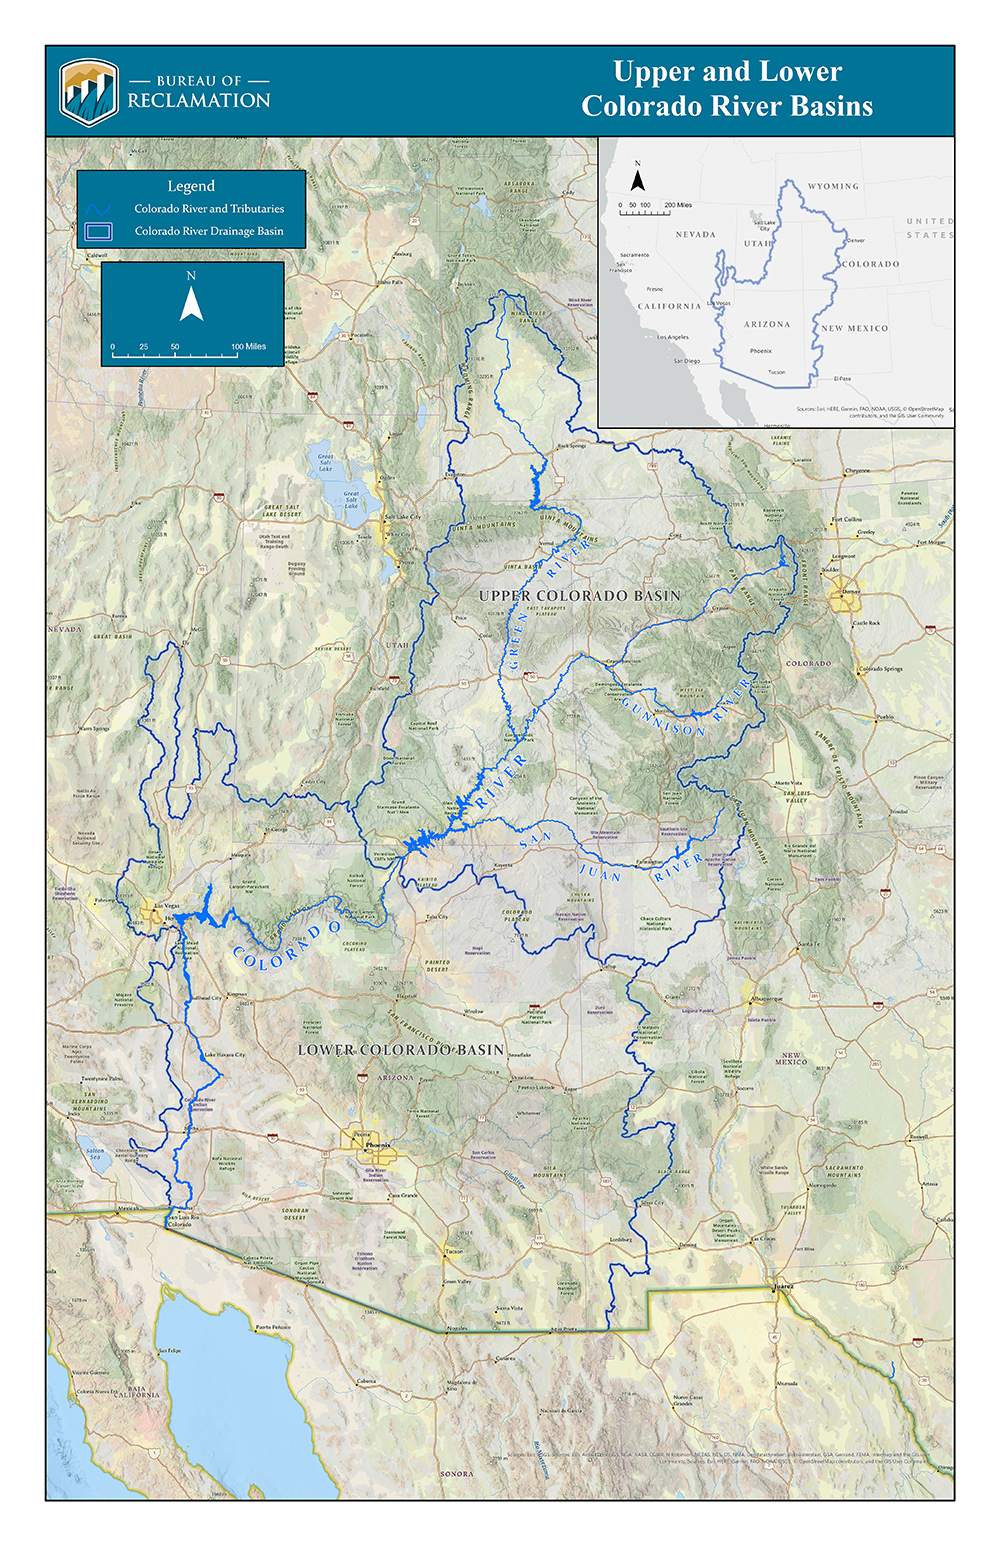 Map of the Colorado River basin